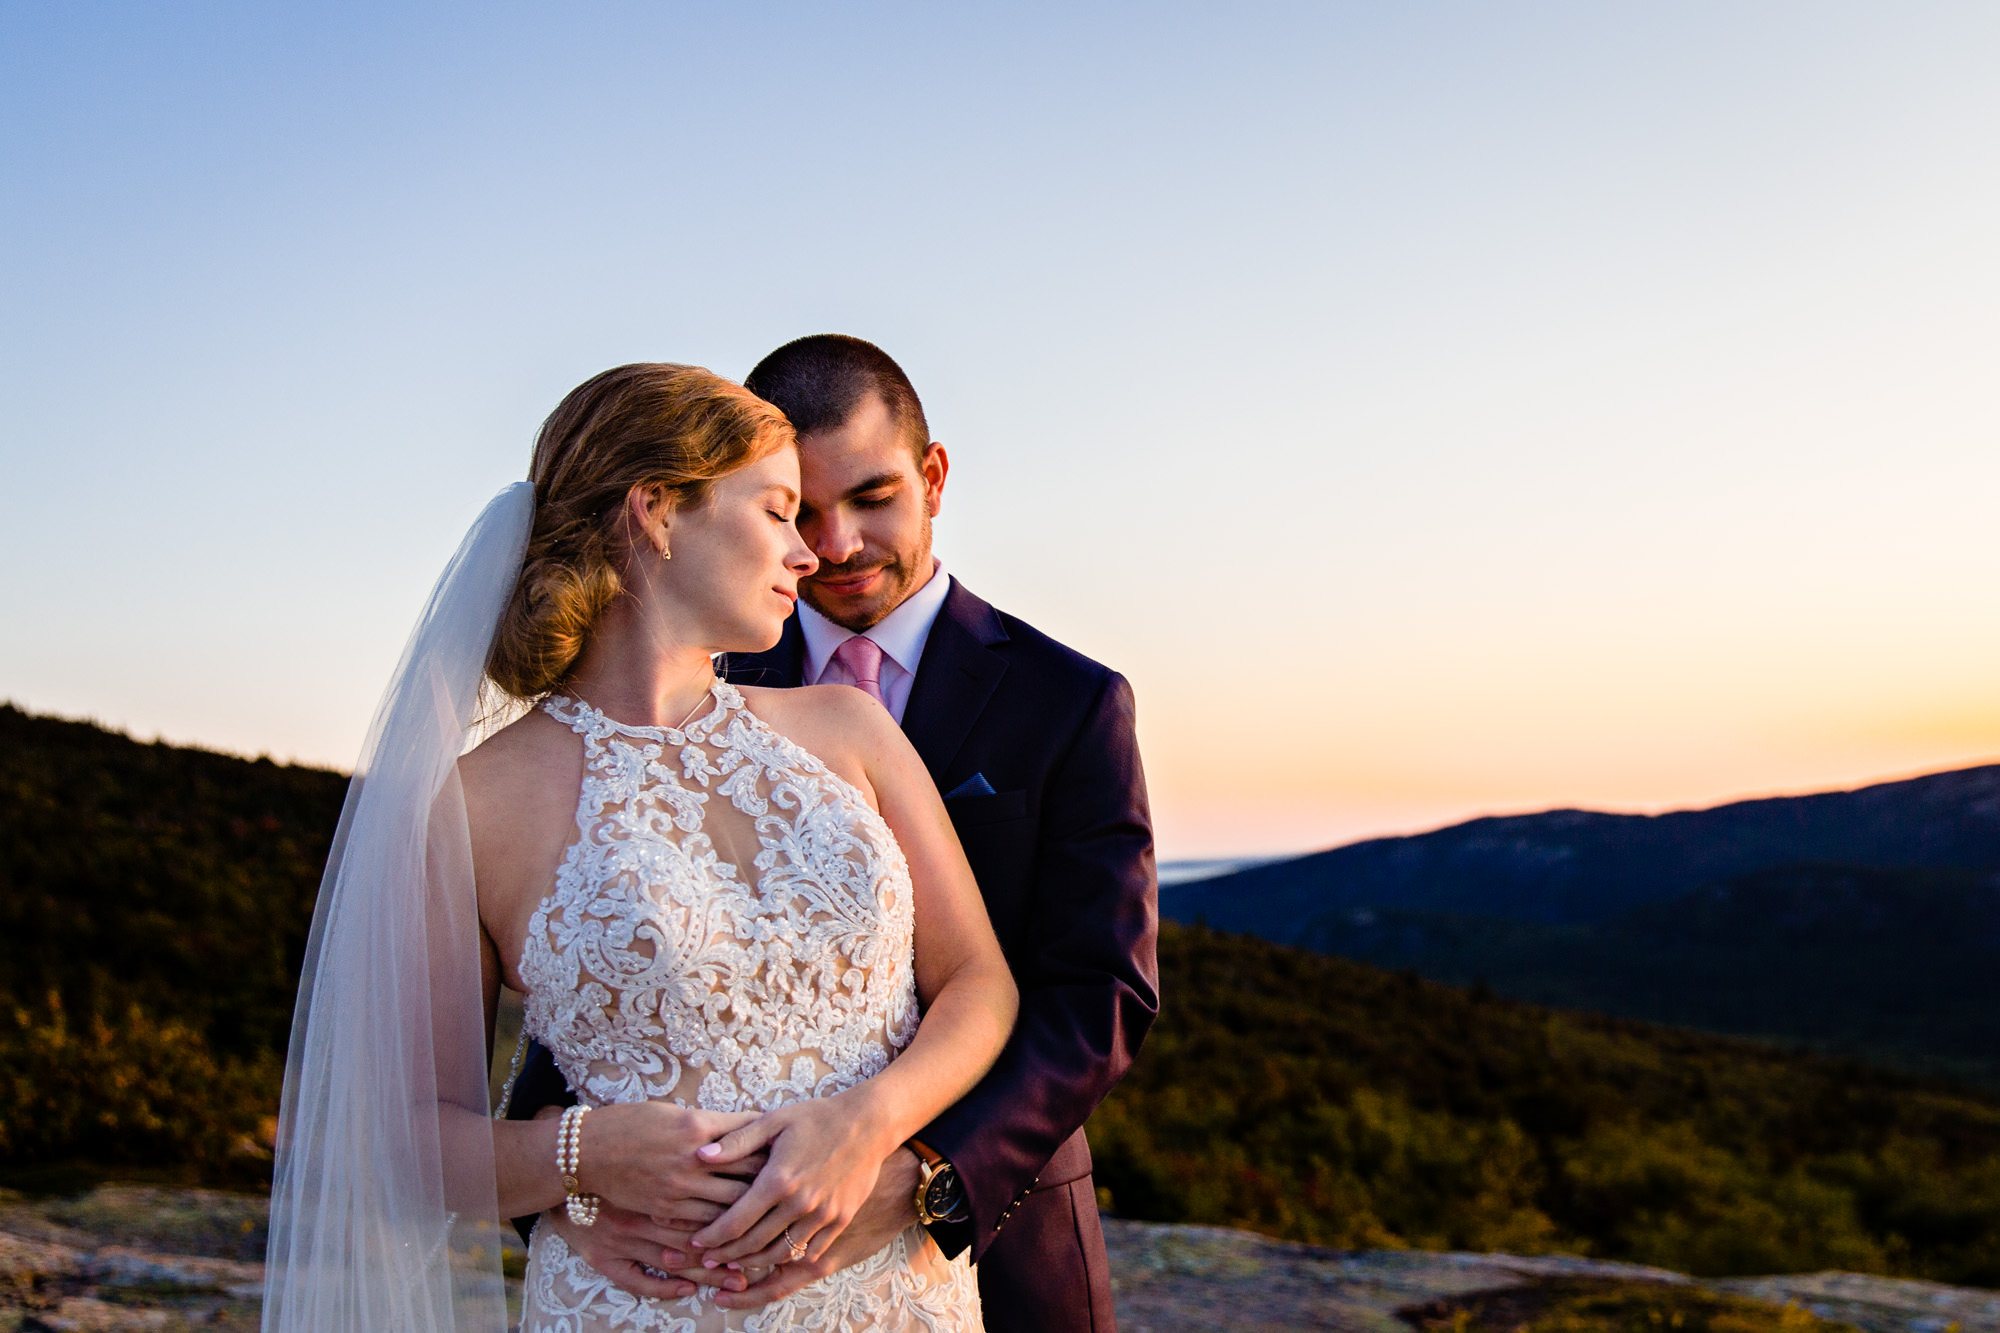 Beautiful sunset portraits taken at an elopement on Cadillac Mountain